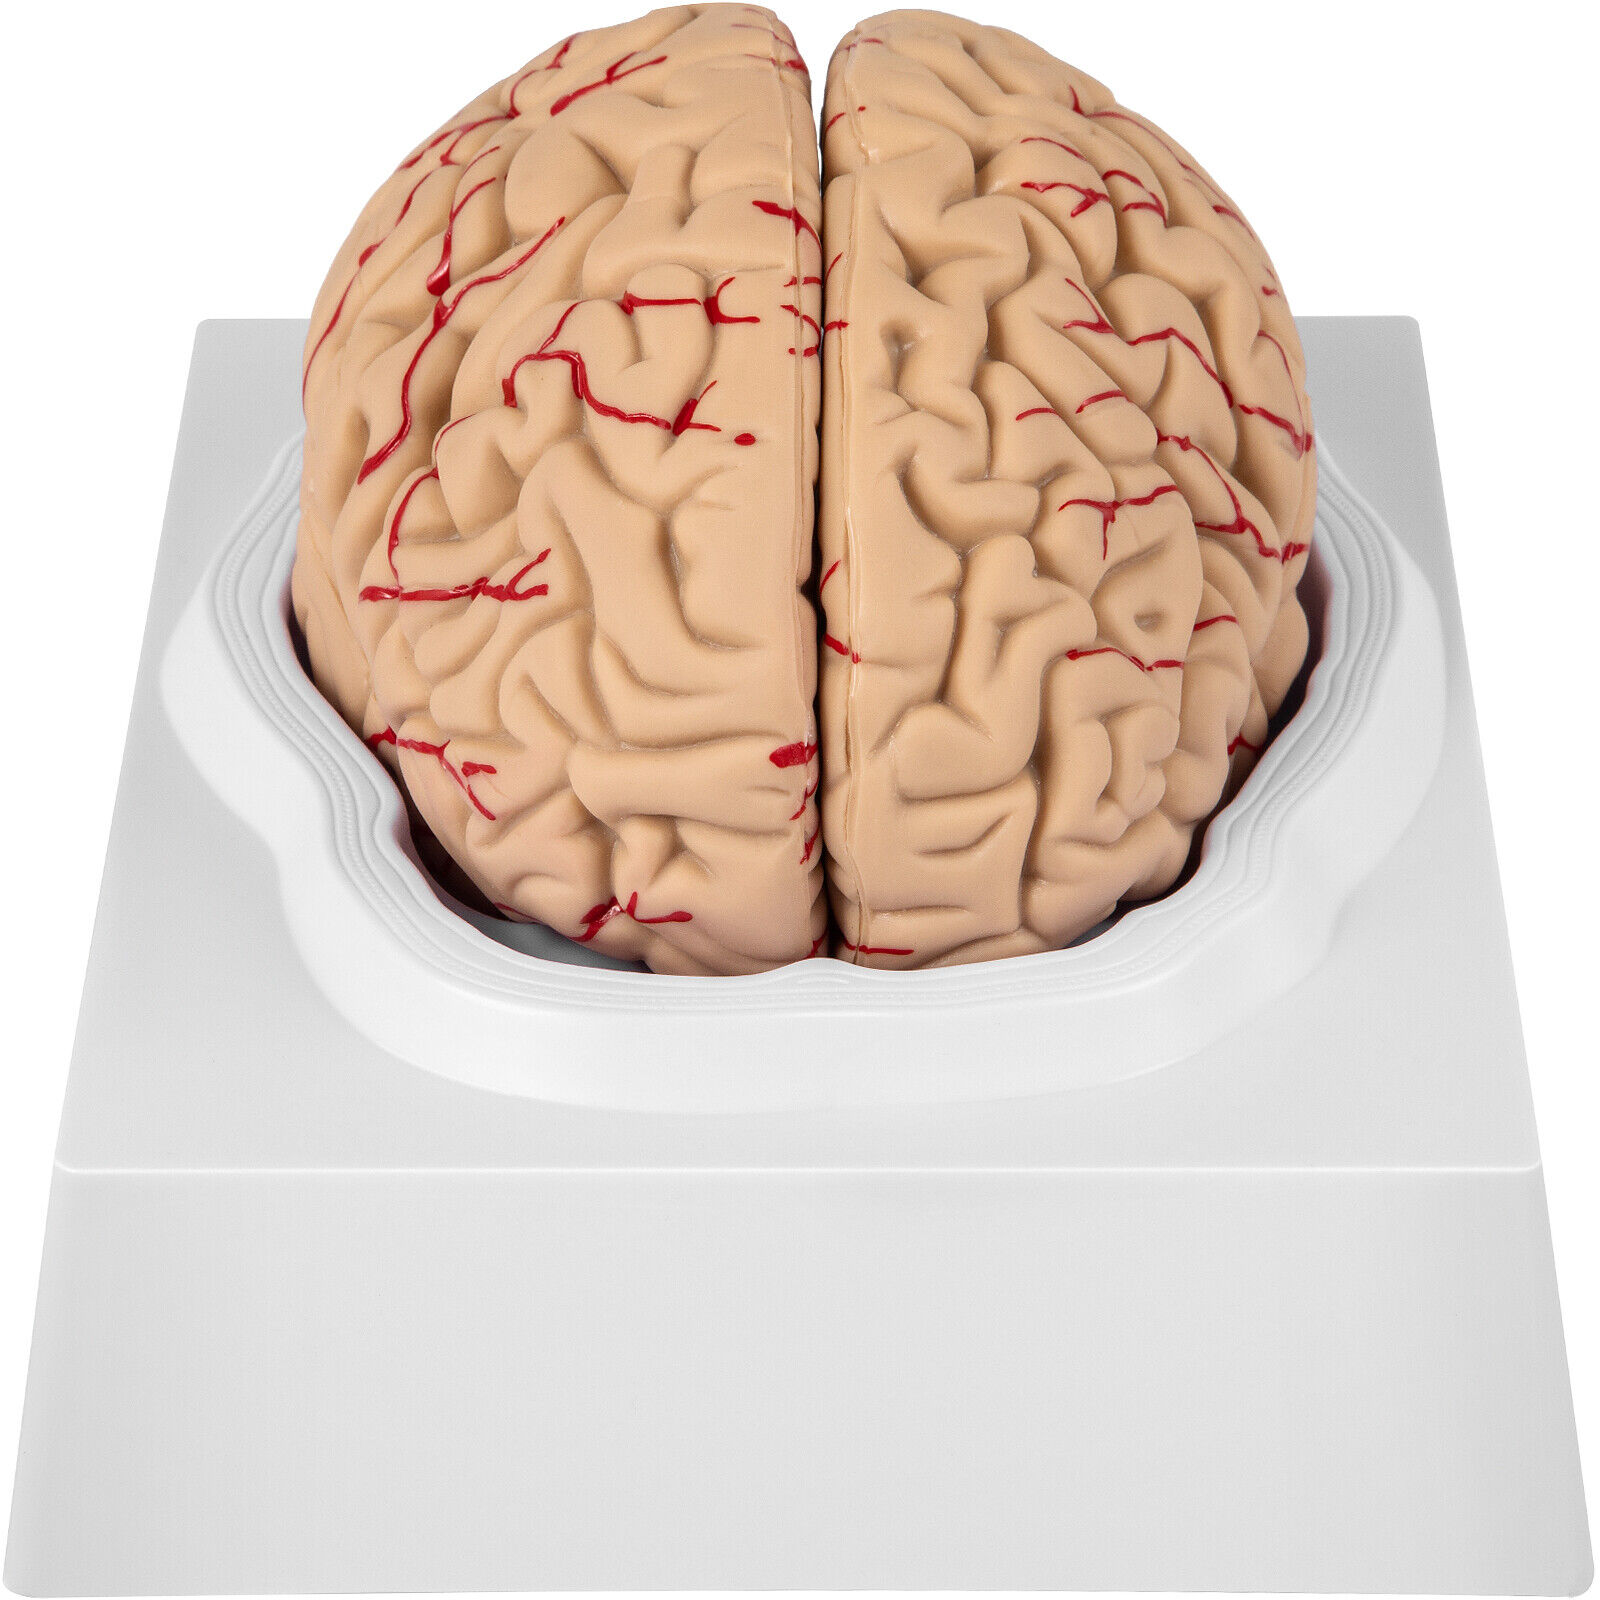 VEVOR Human Brain Model Anatomy Medical Teaching Model 9-Part Life Size & Base